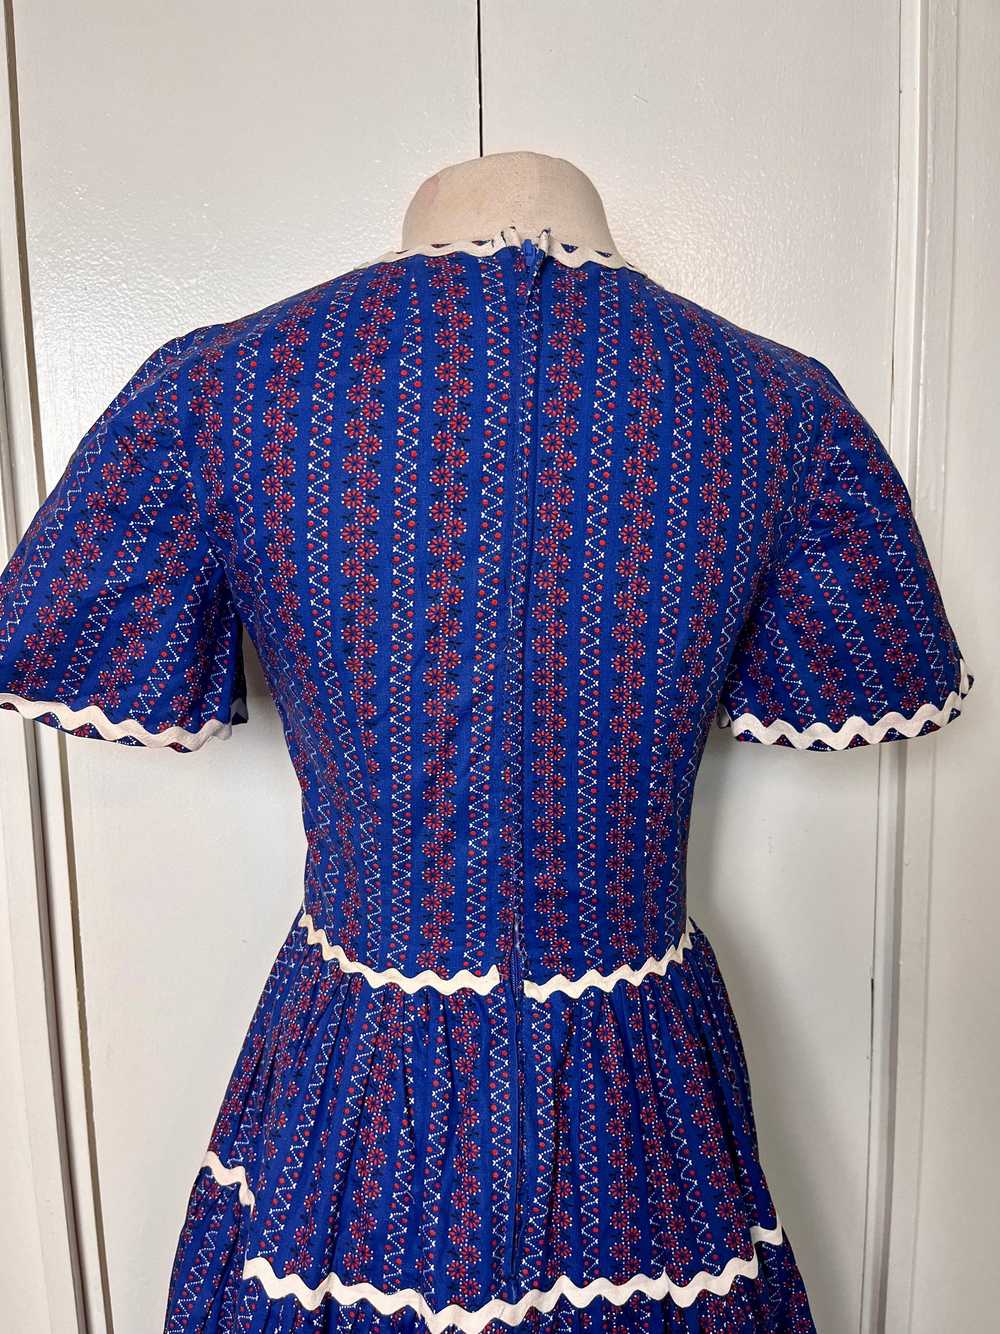 Vintage 1980's "Home-sewn" Square Dancing Dress i… - image 7